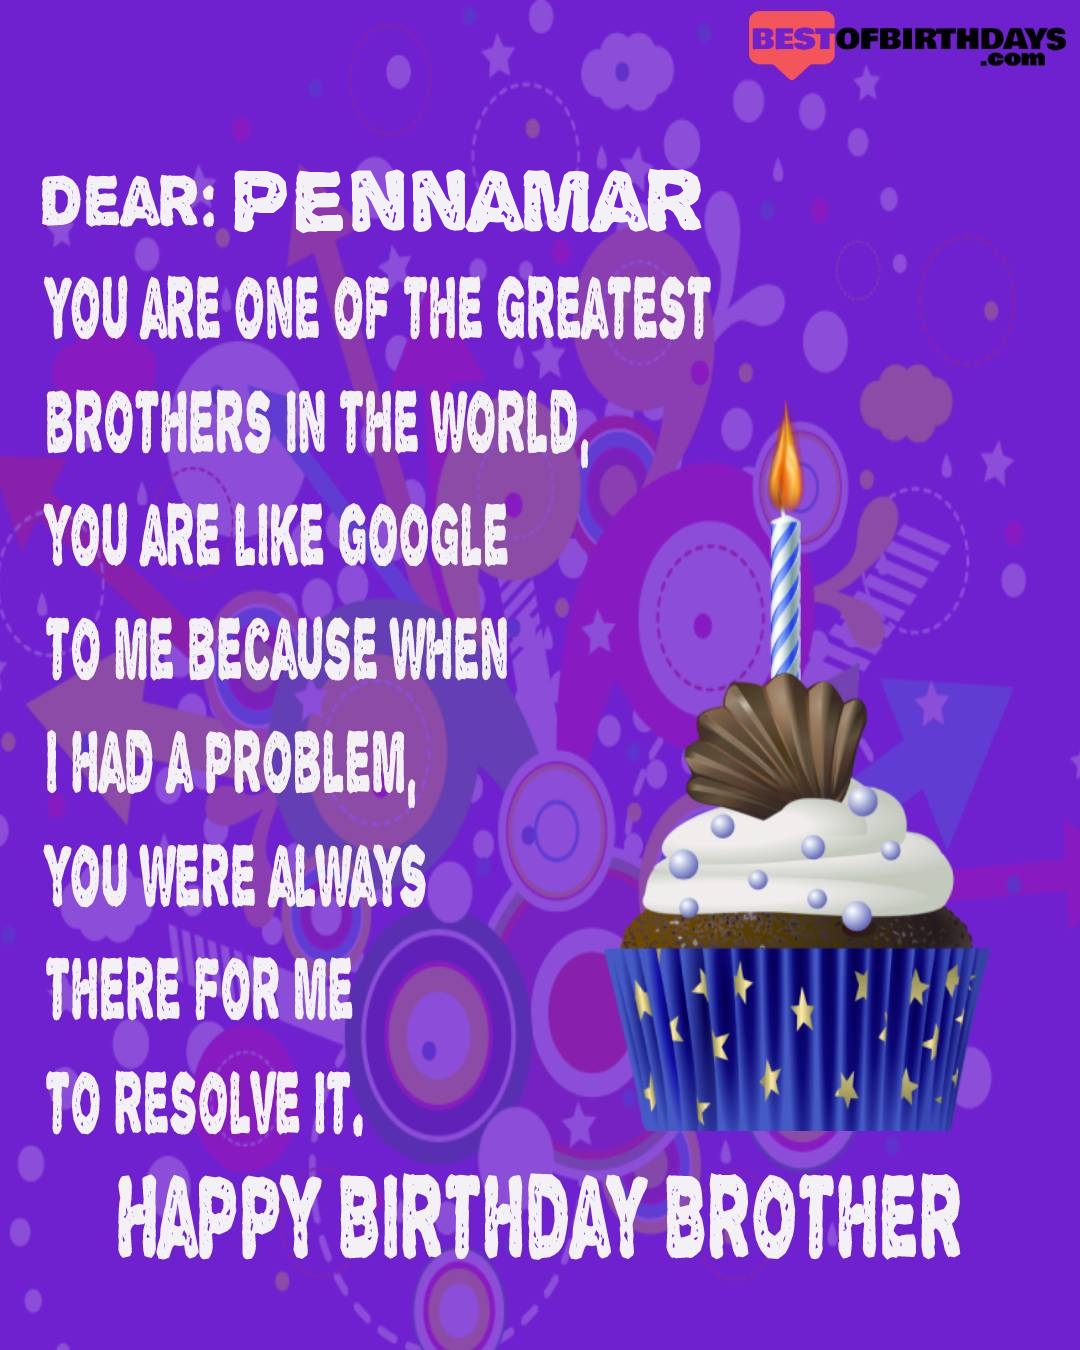 Happy birthday pennamar bhai brother bro